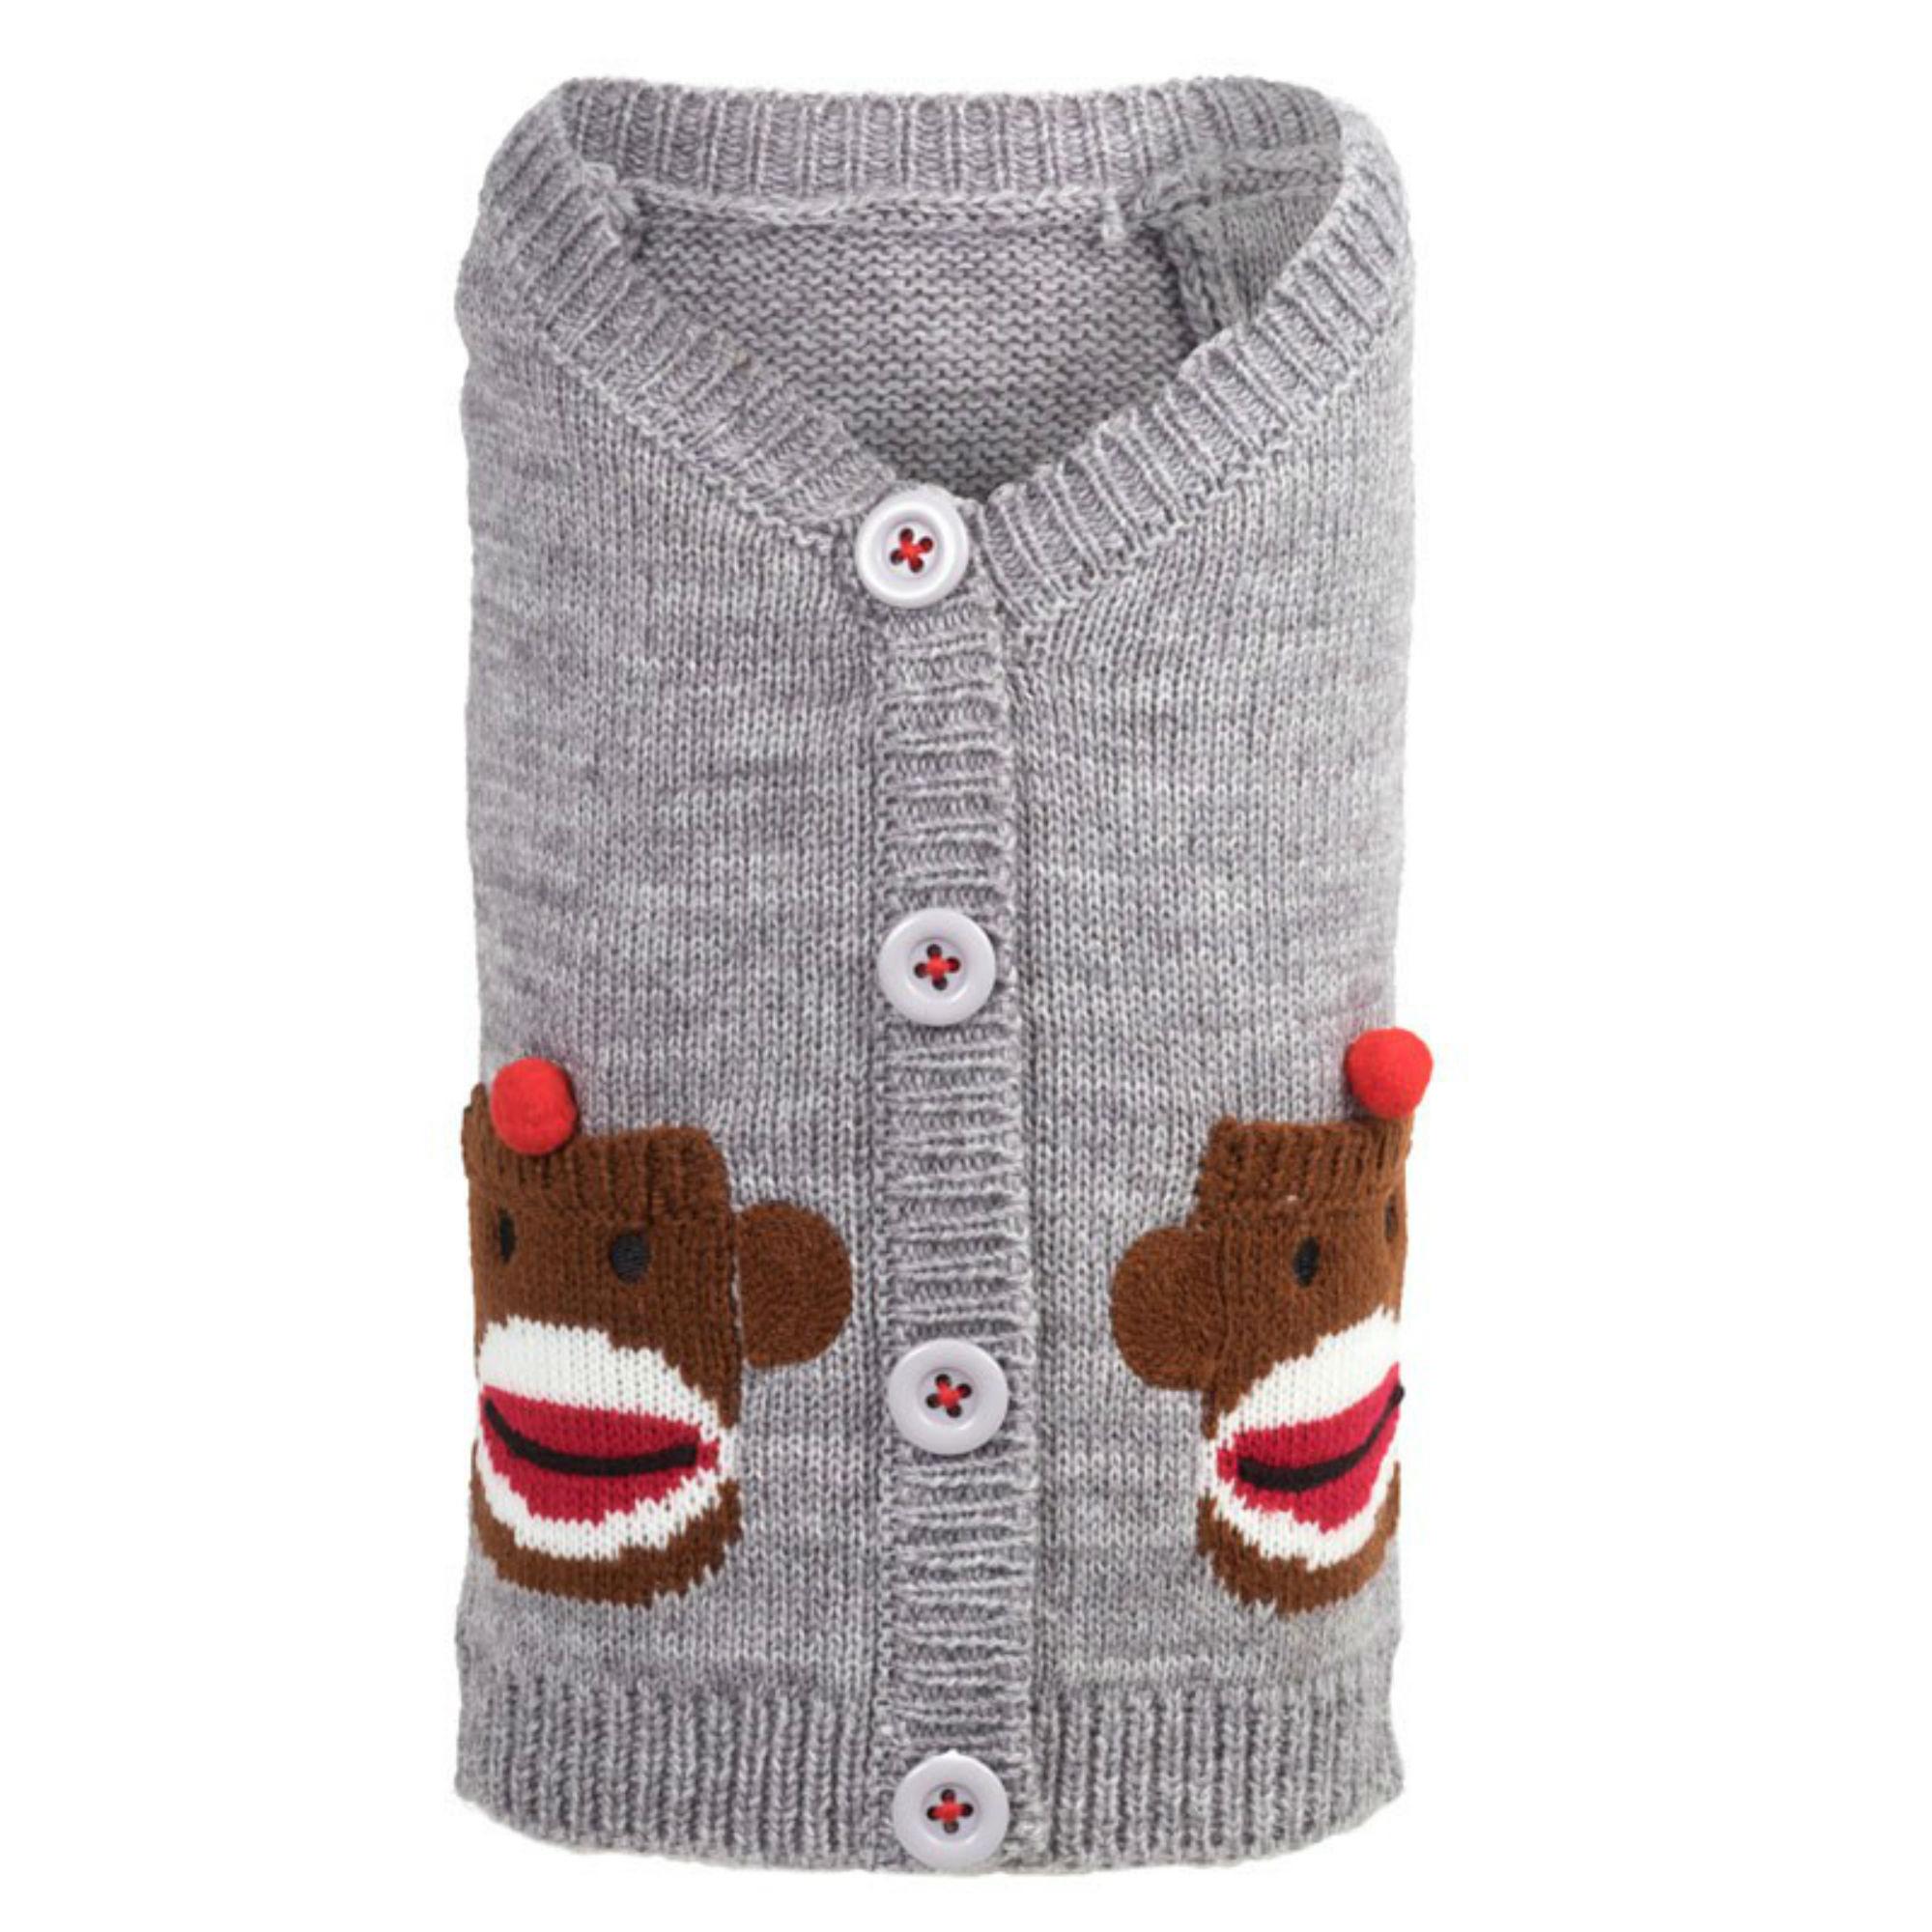 Worthy Dog Sock Monkey Dog Cardigan - Gray